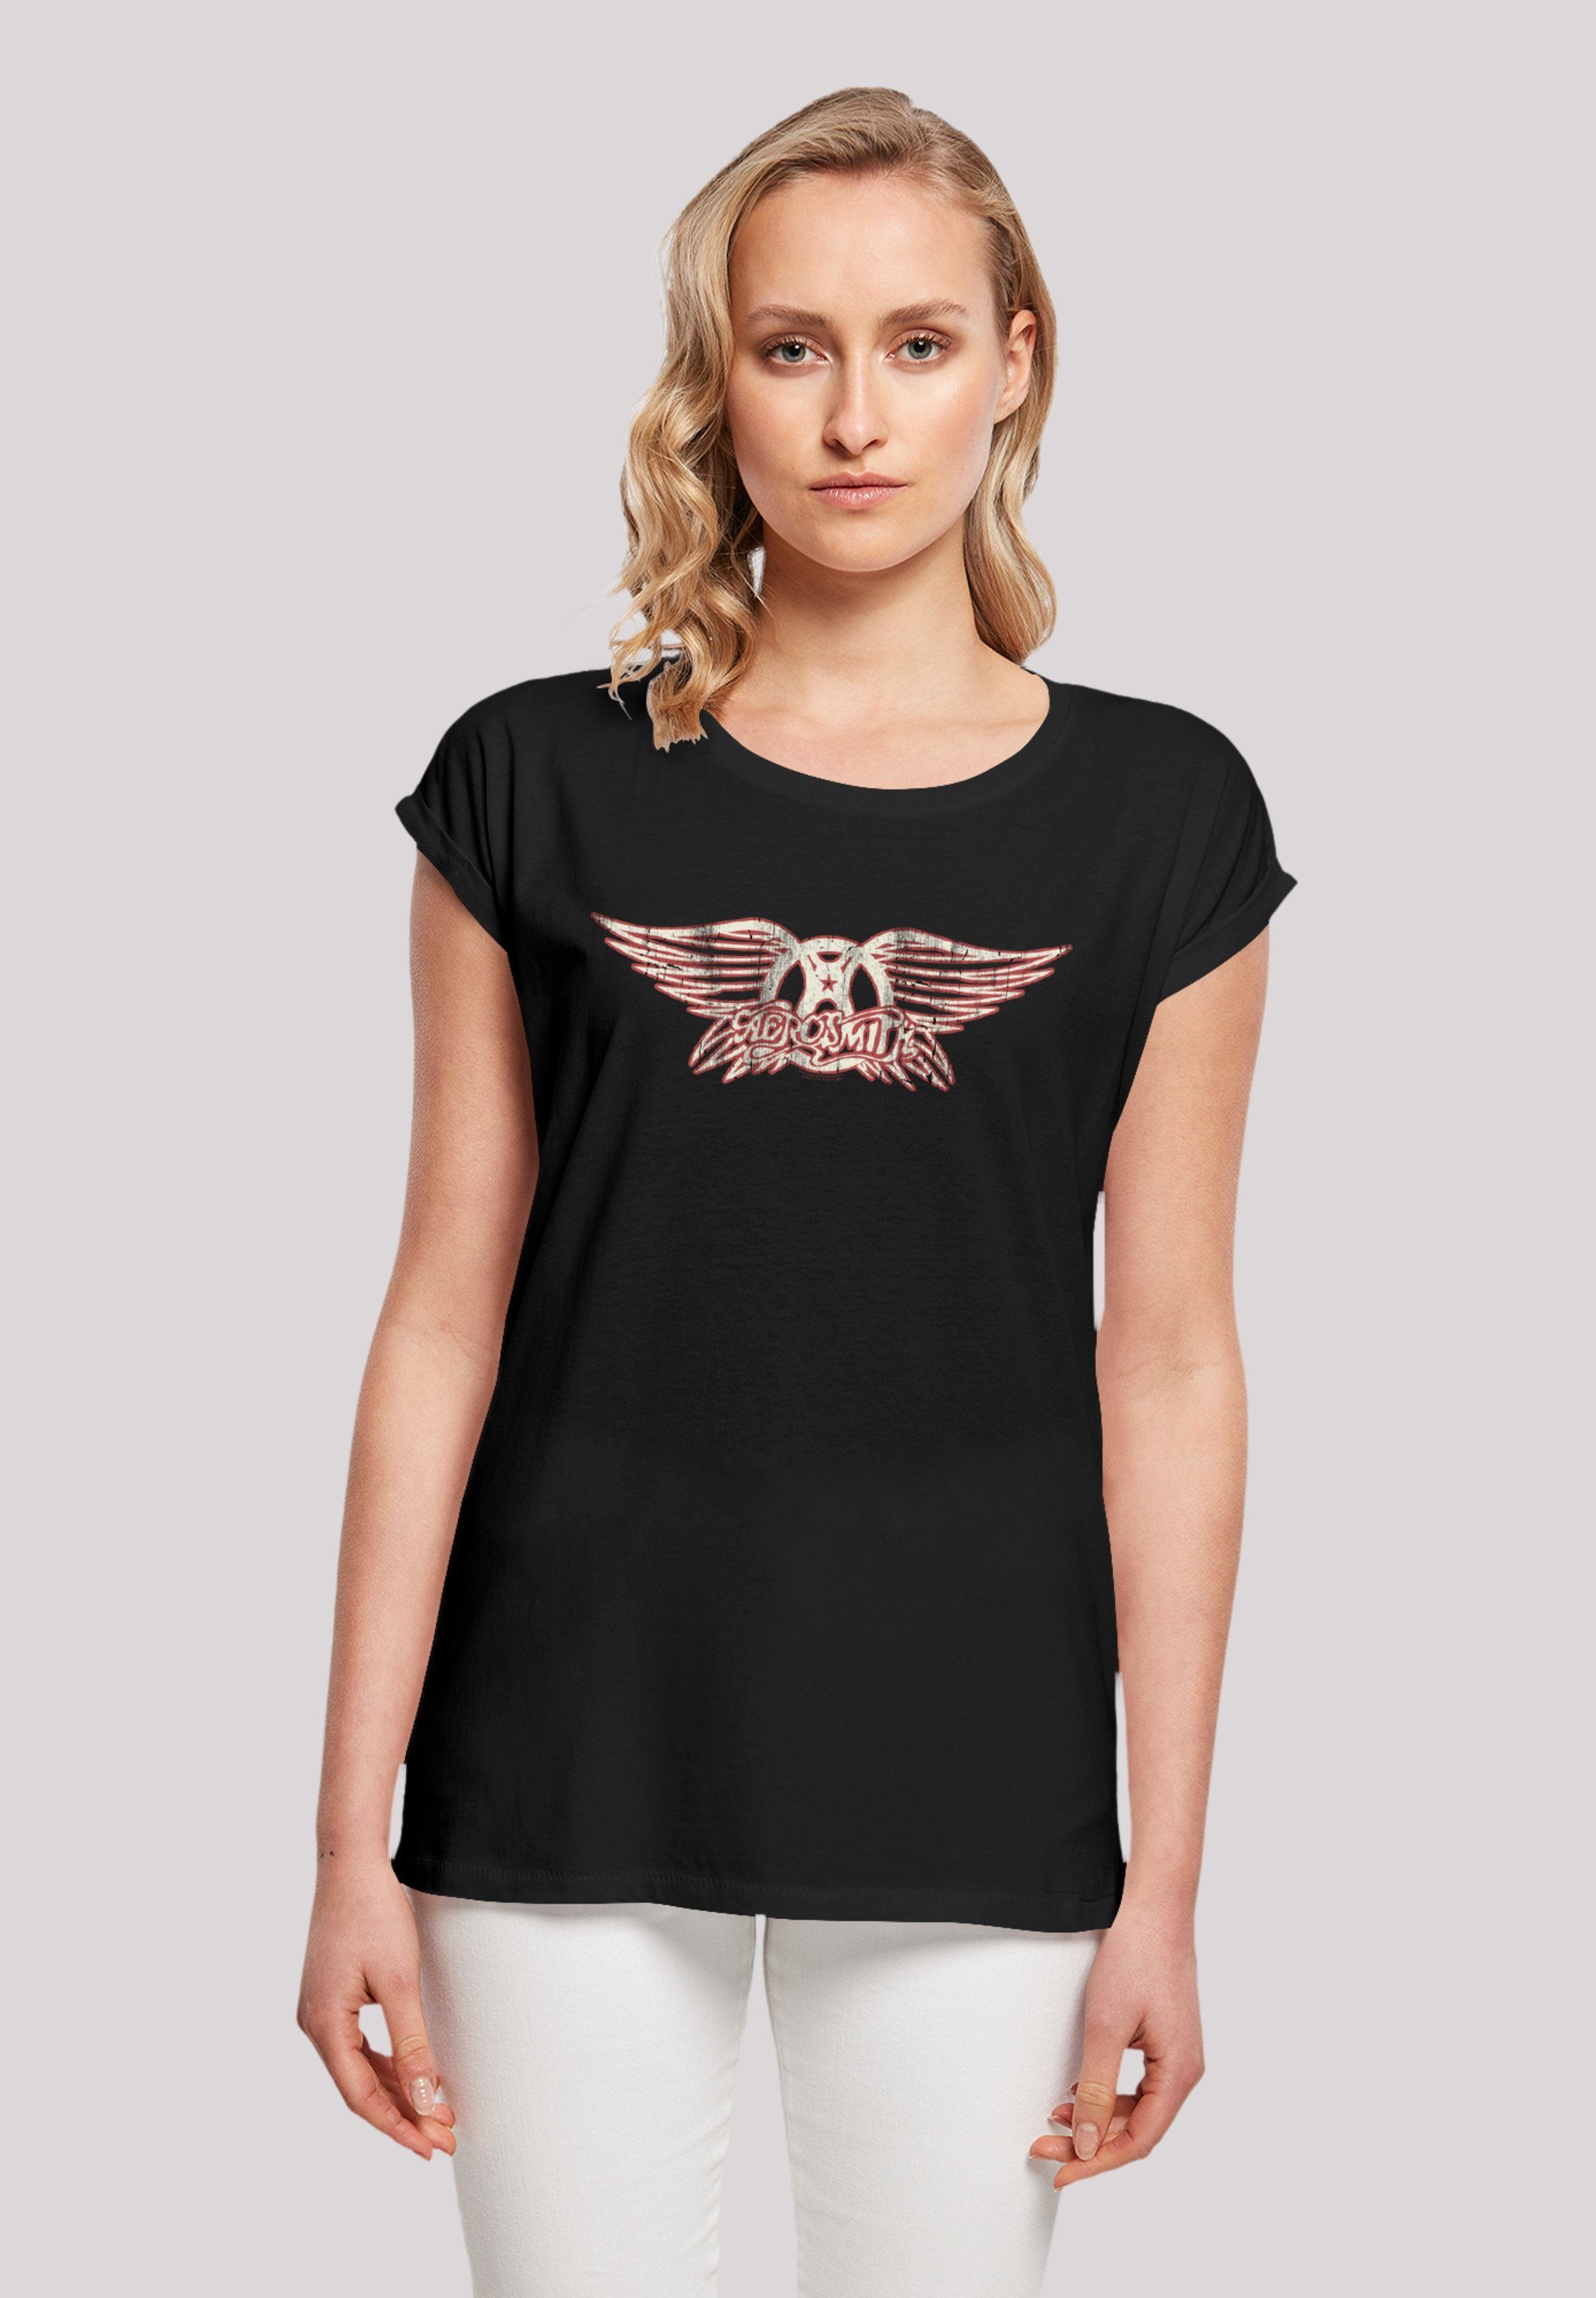 F4NT4STIC T-Shirt Aerosmith Rock Band Logo Premium Qualität, Rock-Musik, Band